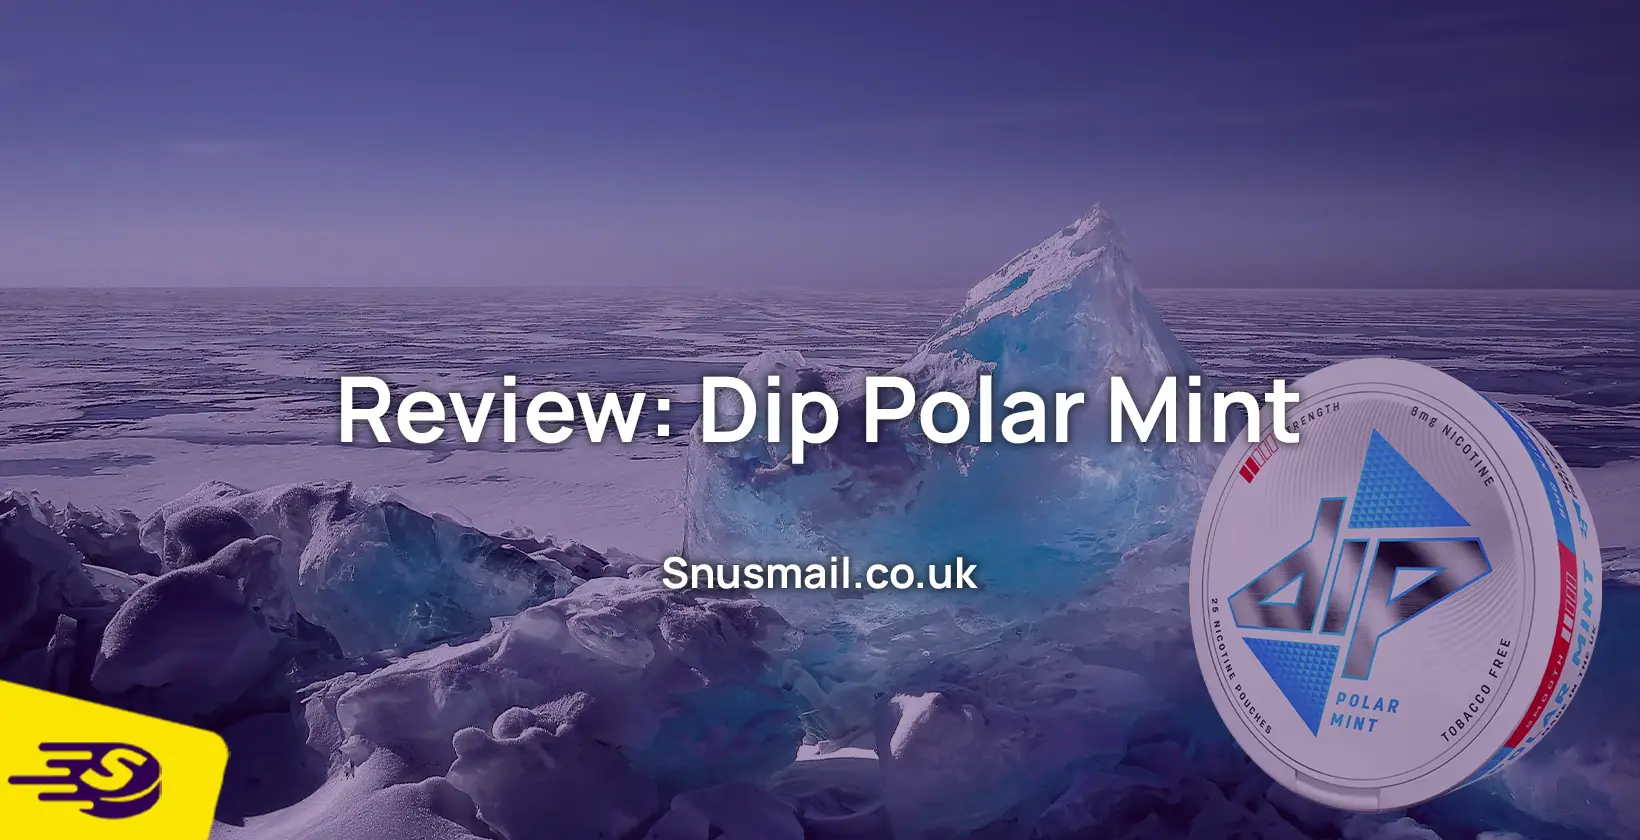 Dip polar mint review